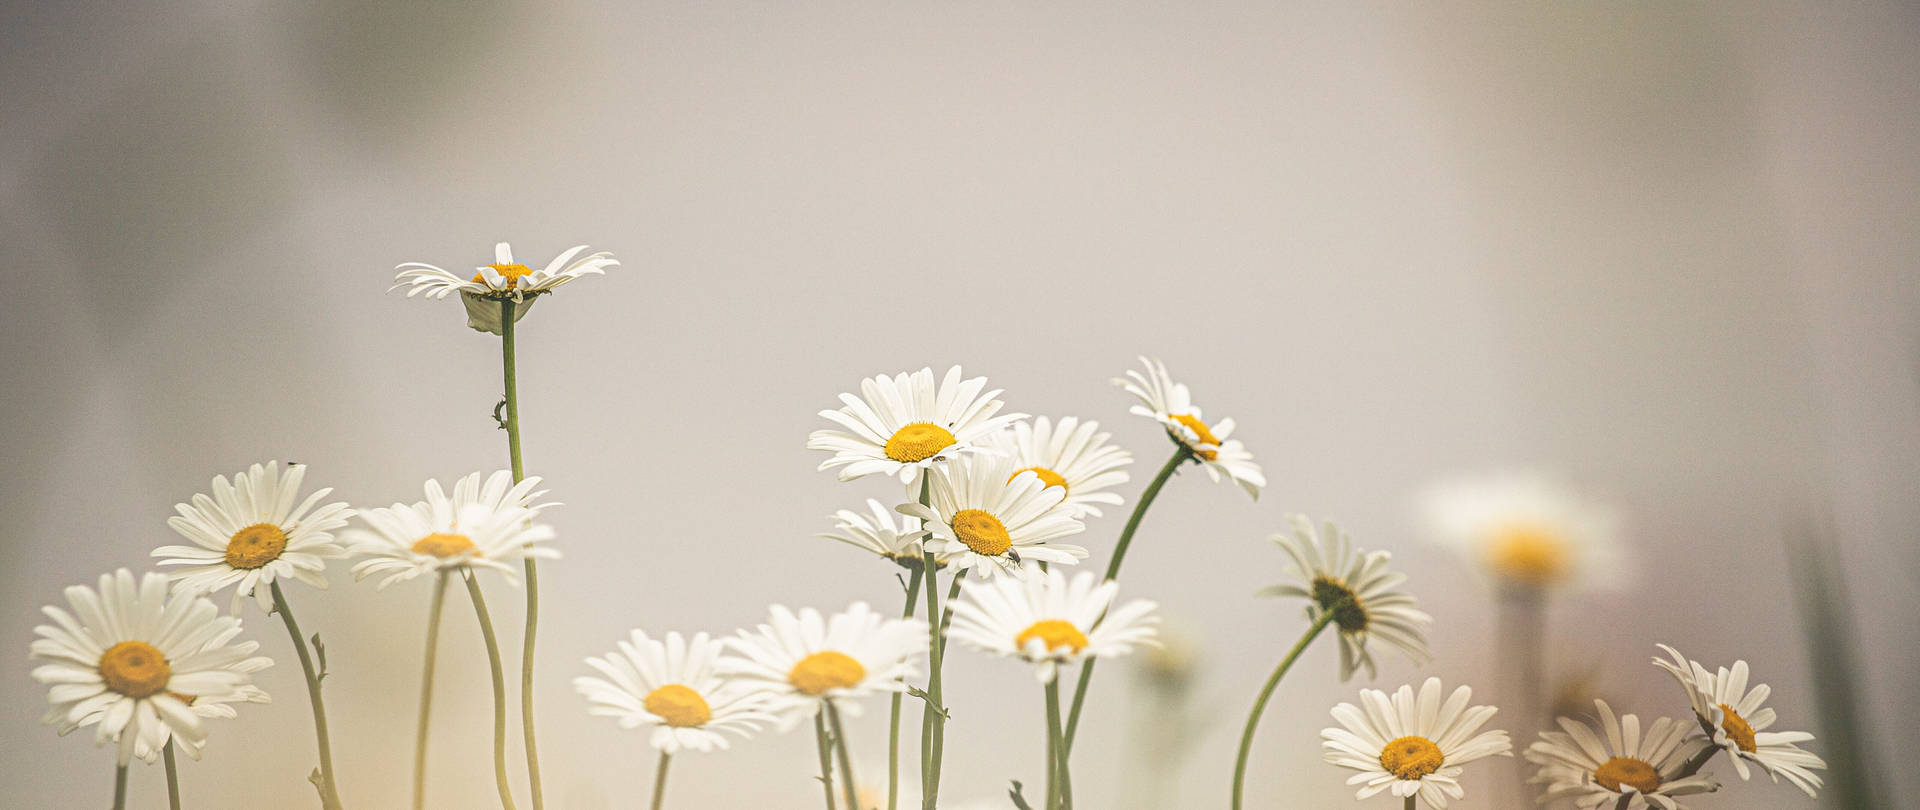 Daisy Flowers In Faint Filter 4k Wallpaper